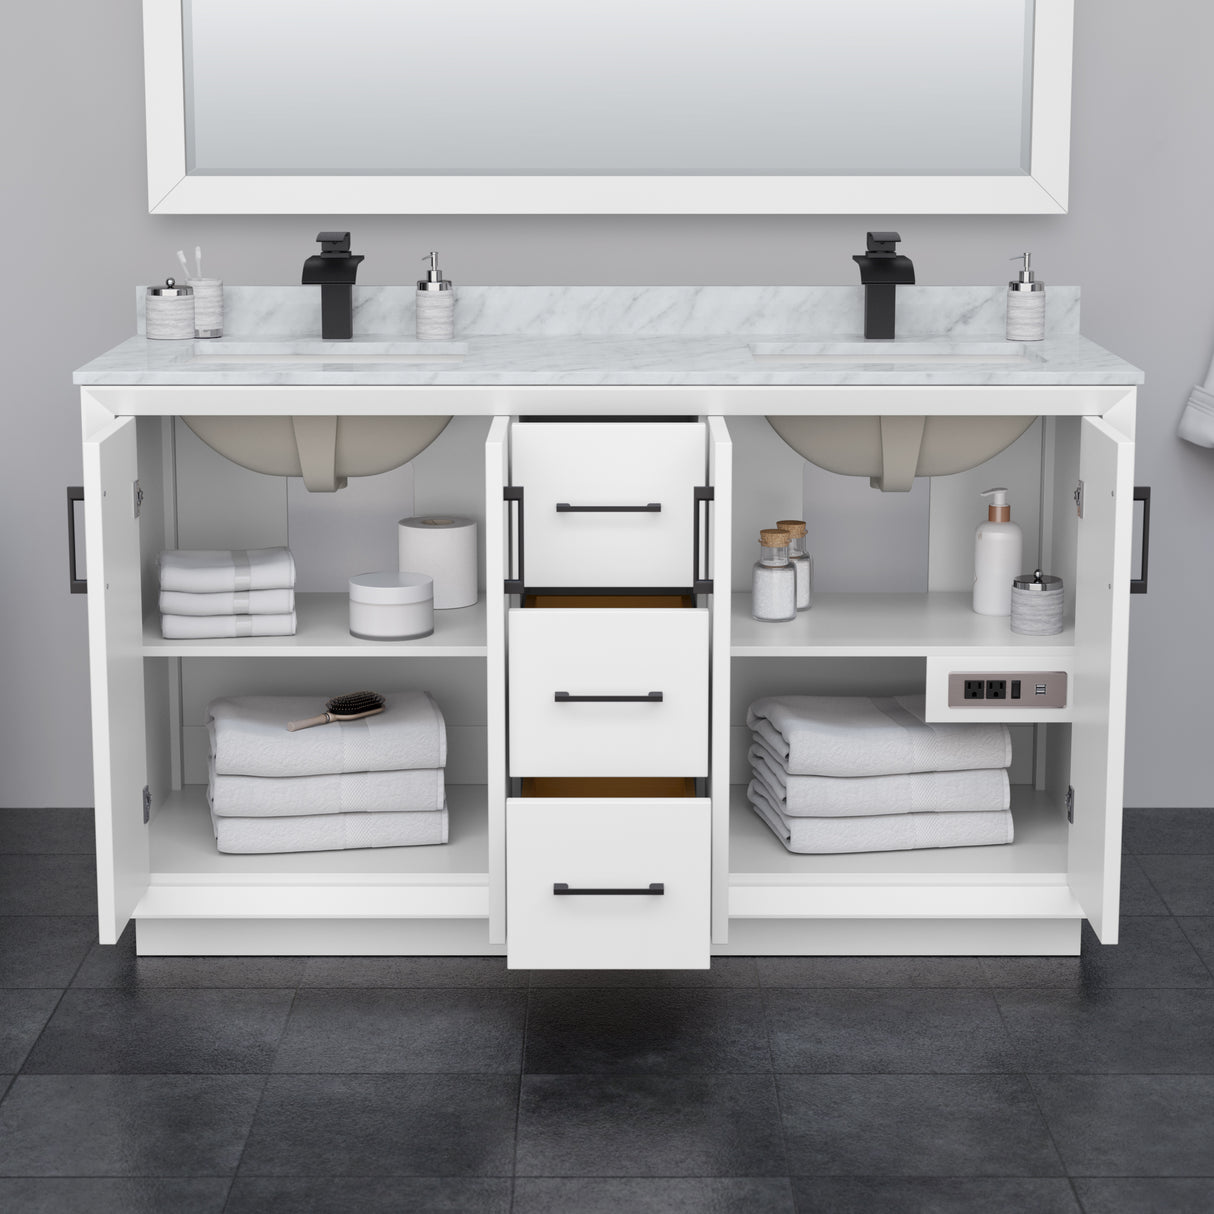 Strada 60 Inch Double Bathroom Vanity in White White Carrara Marble Countertop Undermount Square Sink Brushed Nickel Trim